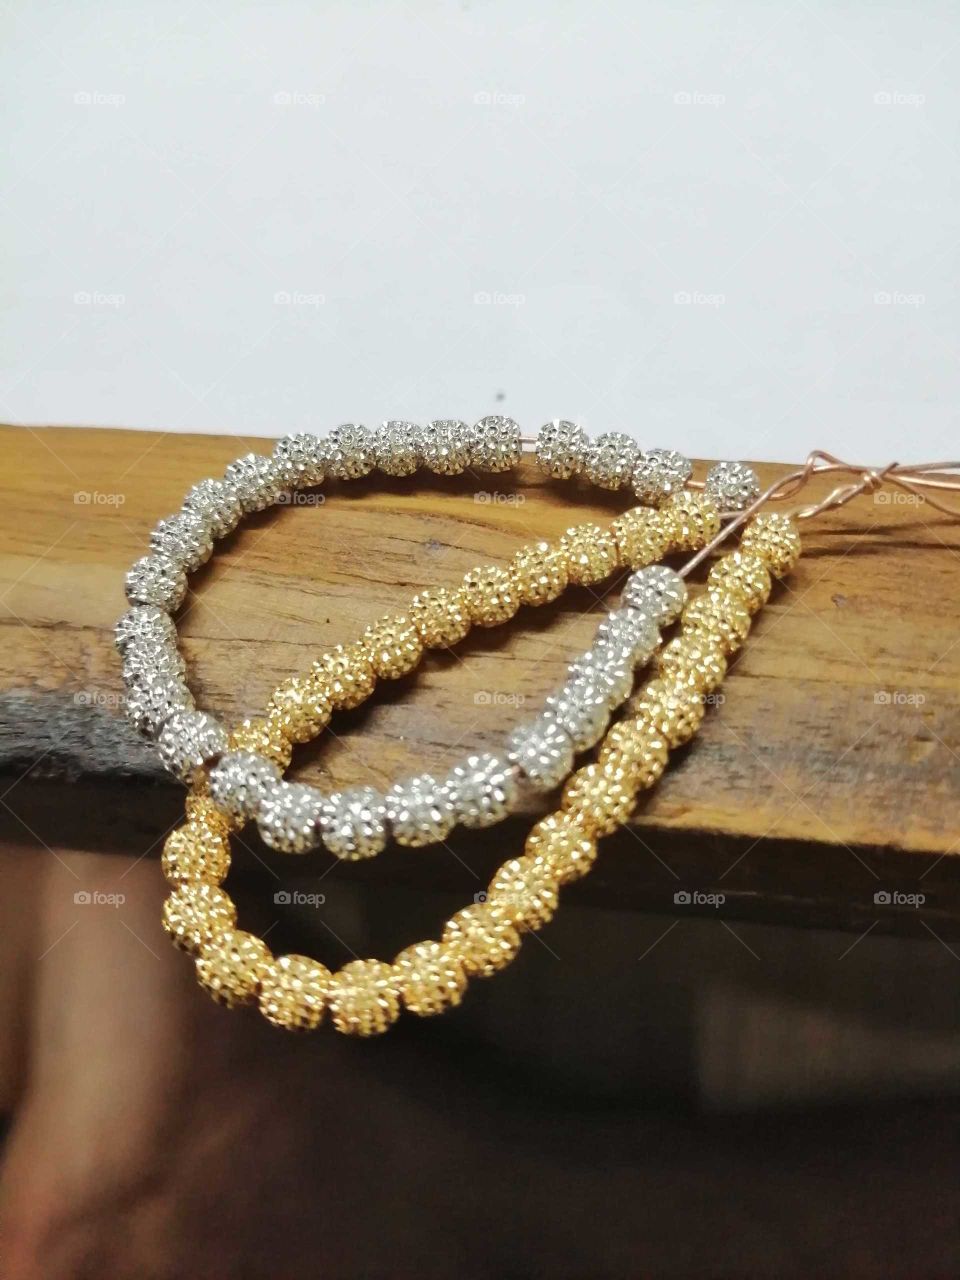 Gold & silver ball chains